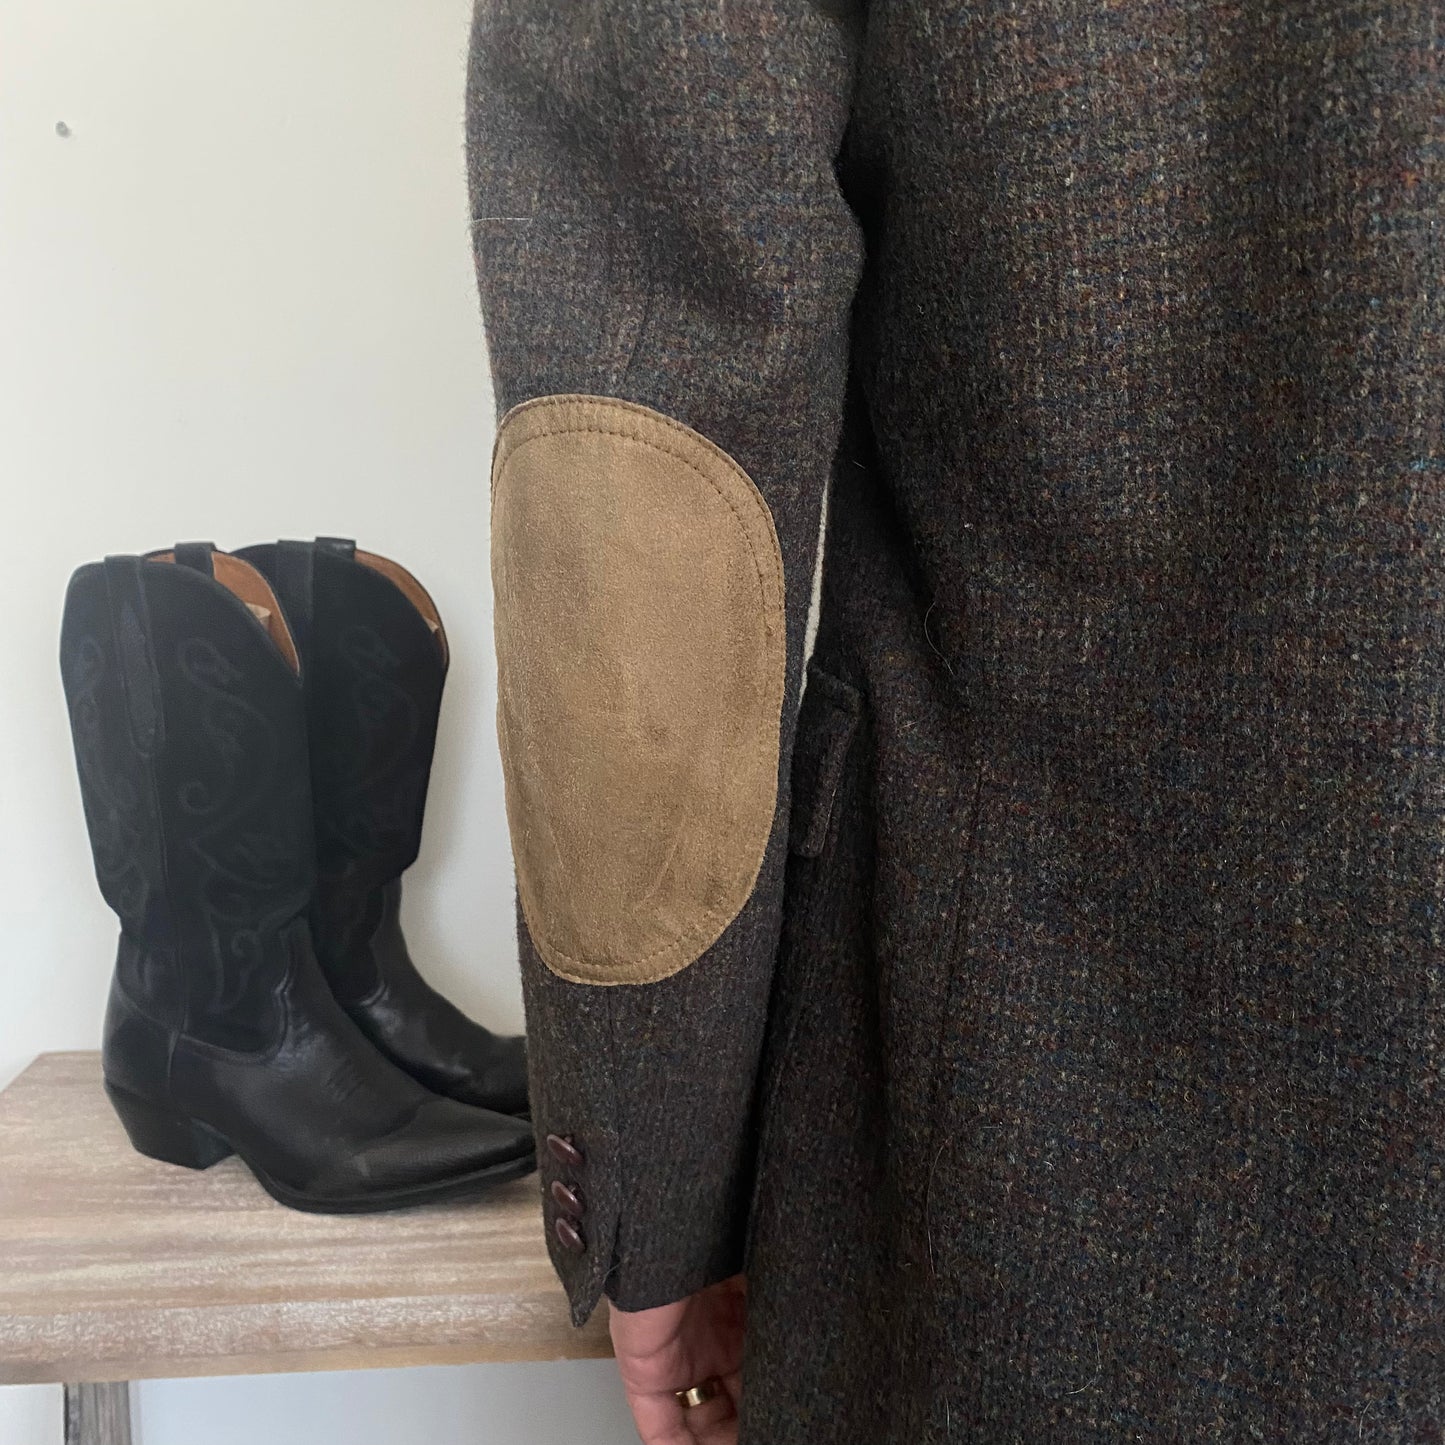 Gorgeous Vintage Men’s Pendleton Western Wool Suede Blazer Large